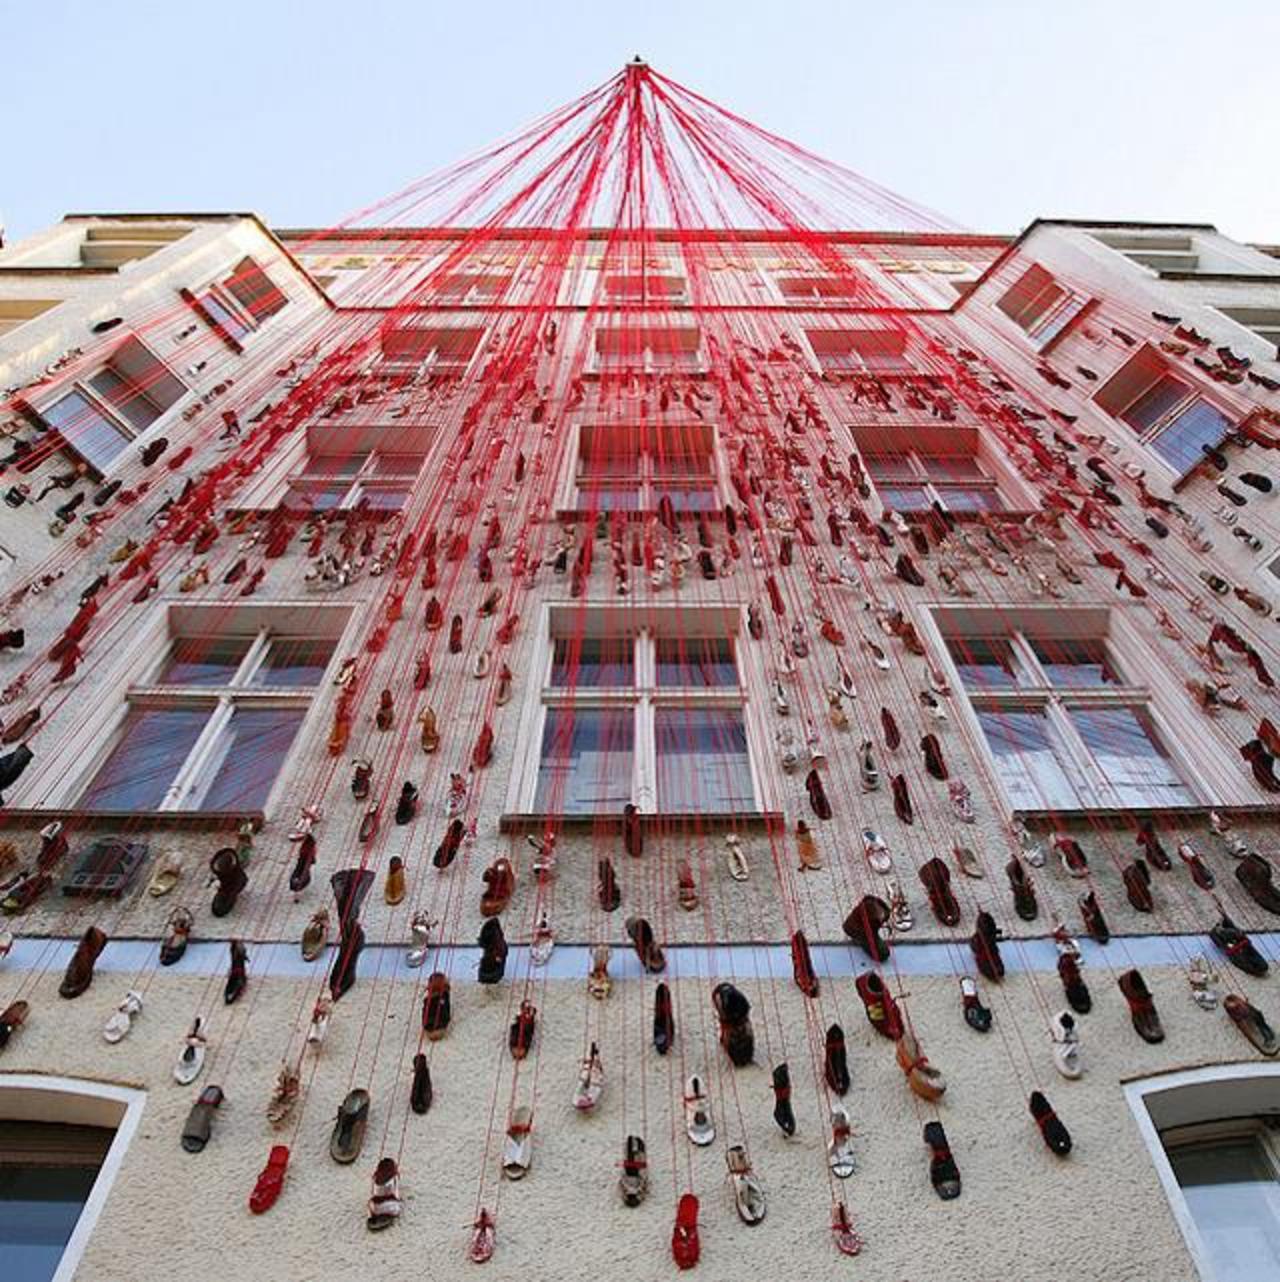 Chiharu Siota Facade Sculpture 'The House of Imagination' #art #sculpture http://t.co/ICX2nJG5vG